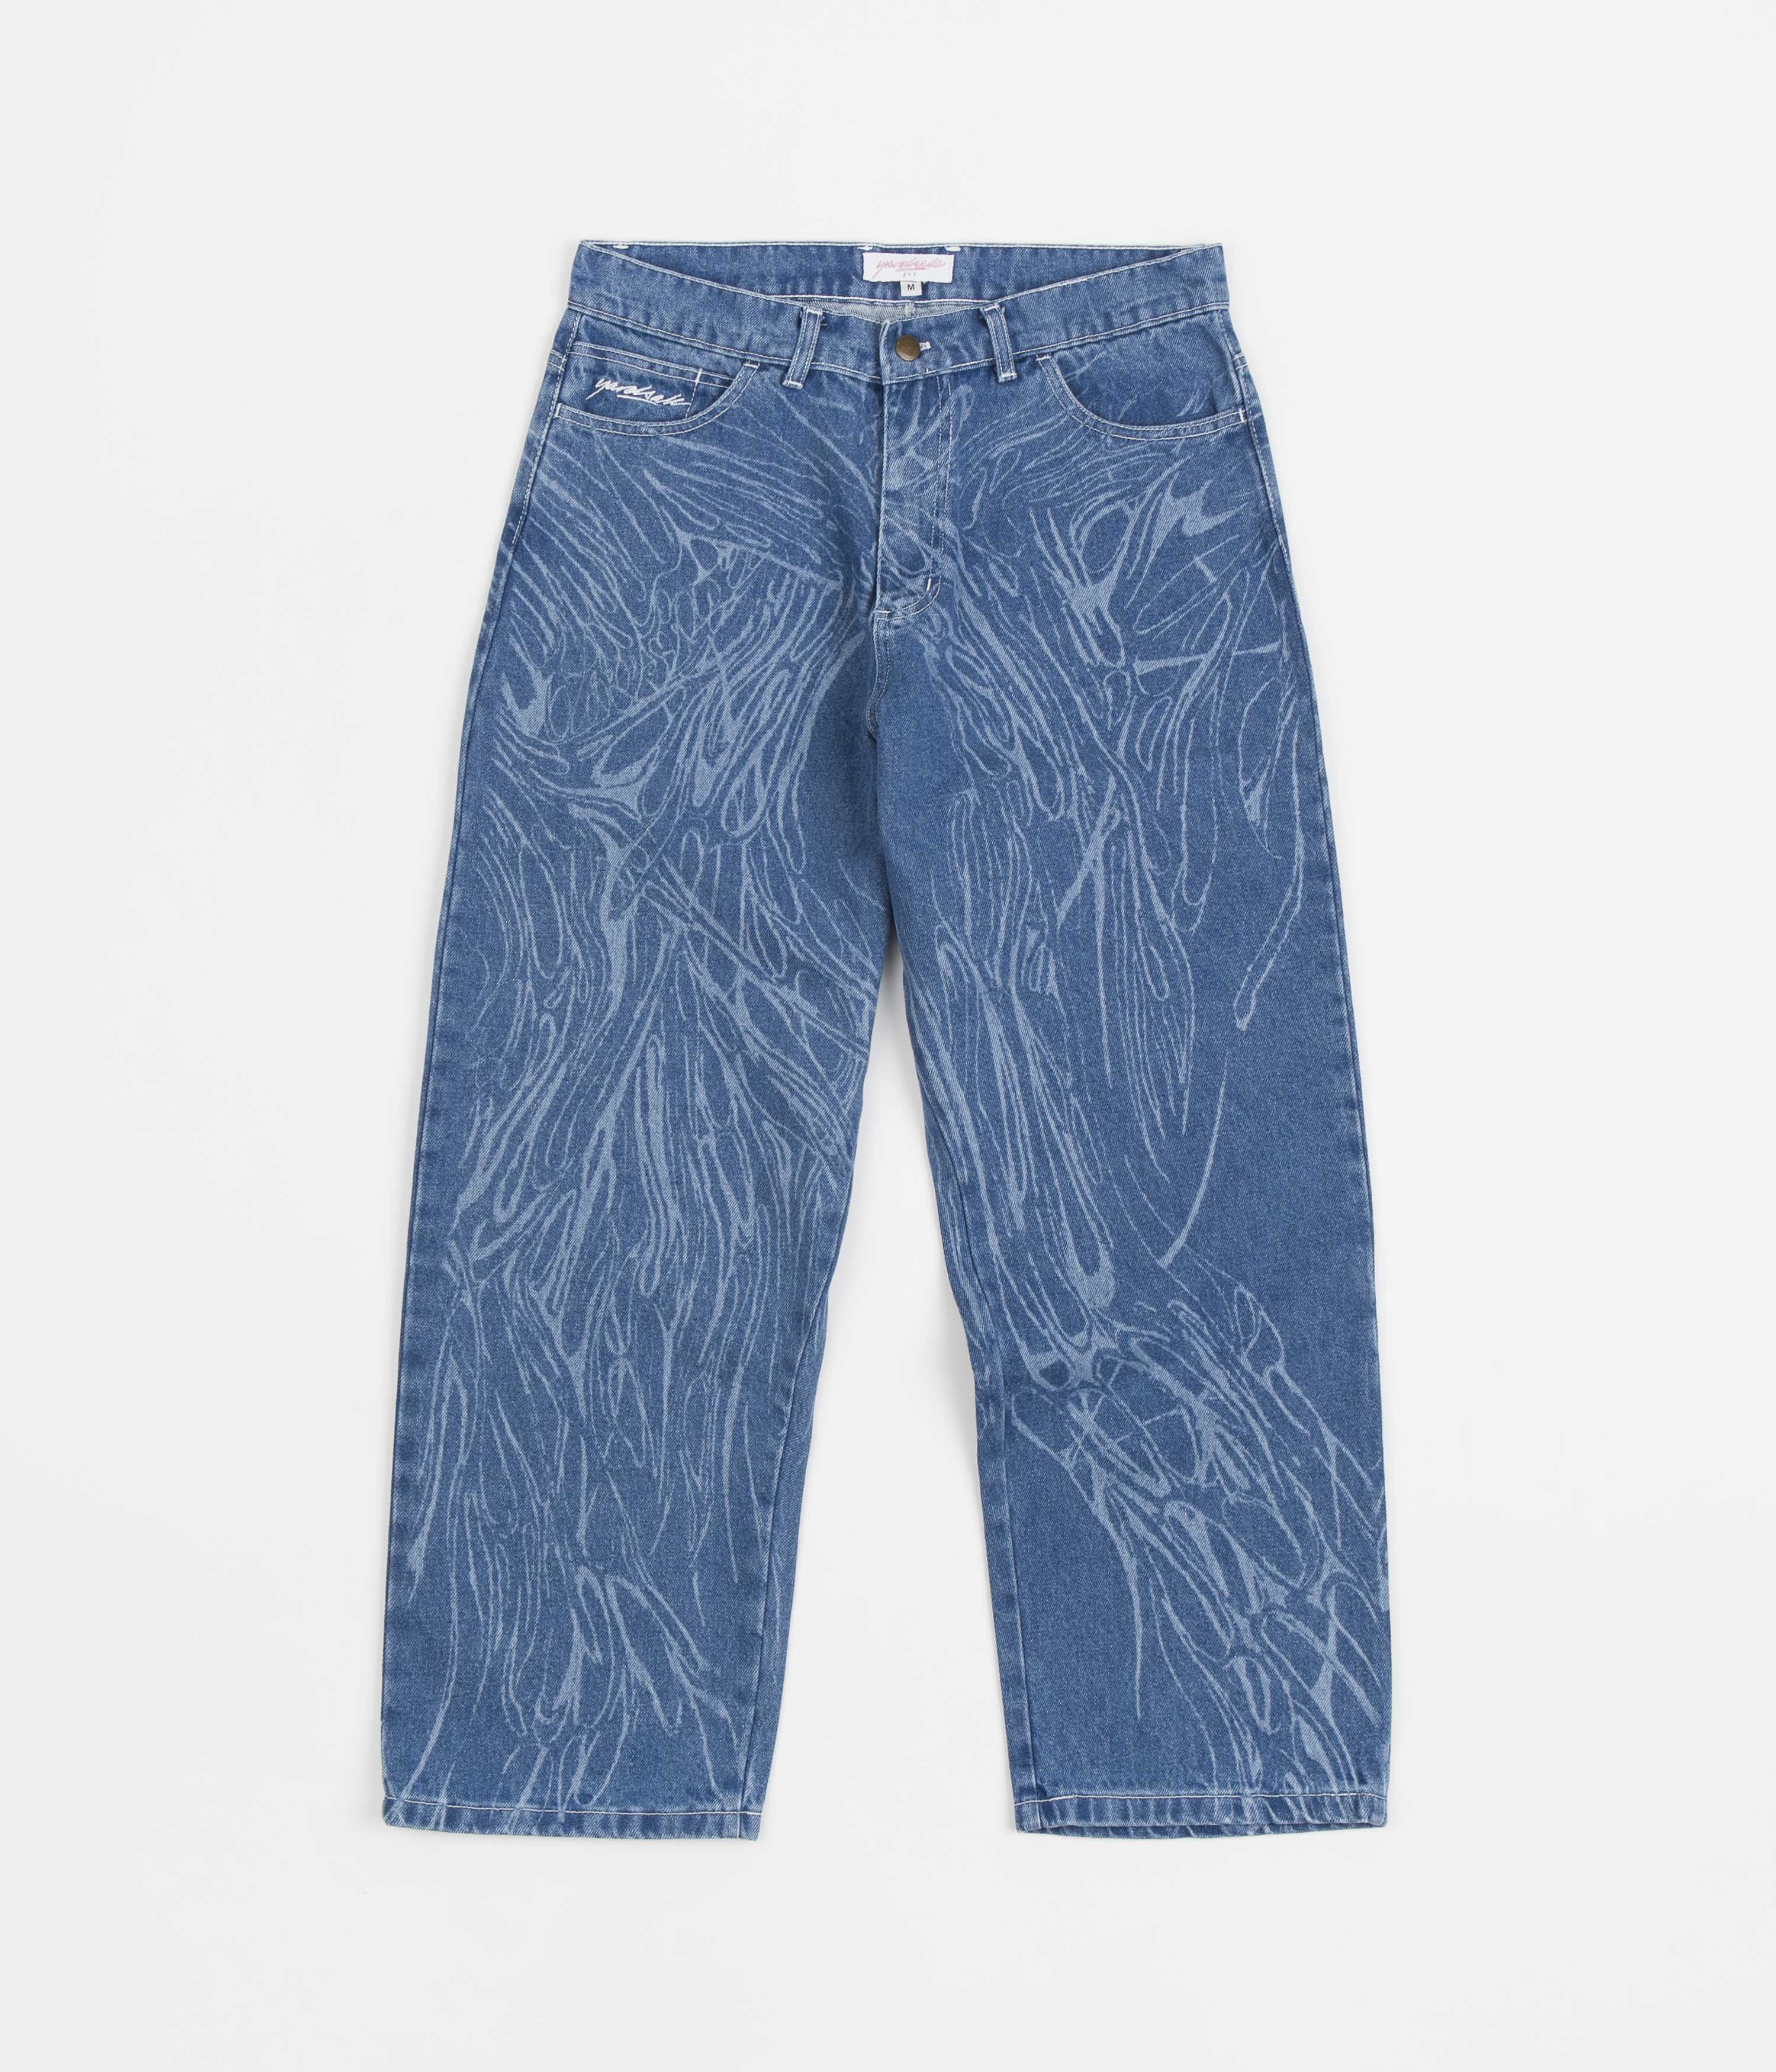 Yardsale Ripper Jeans - Denim